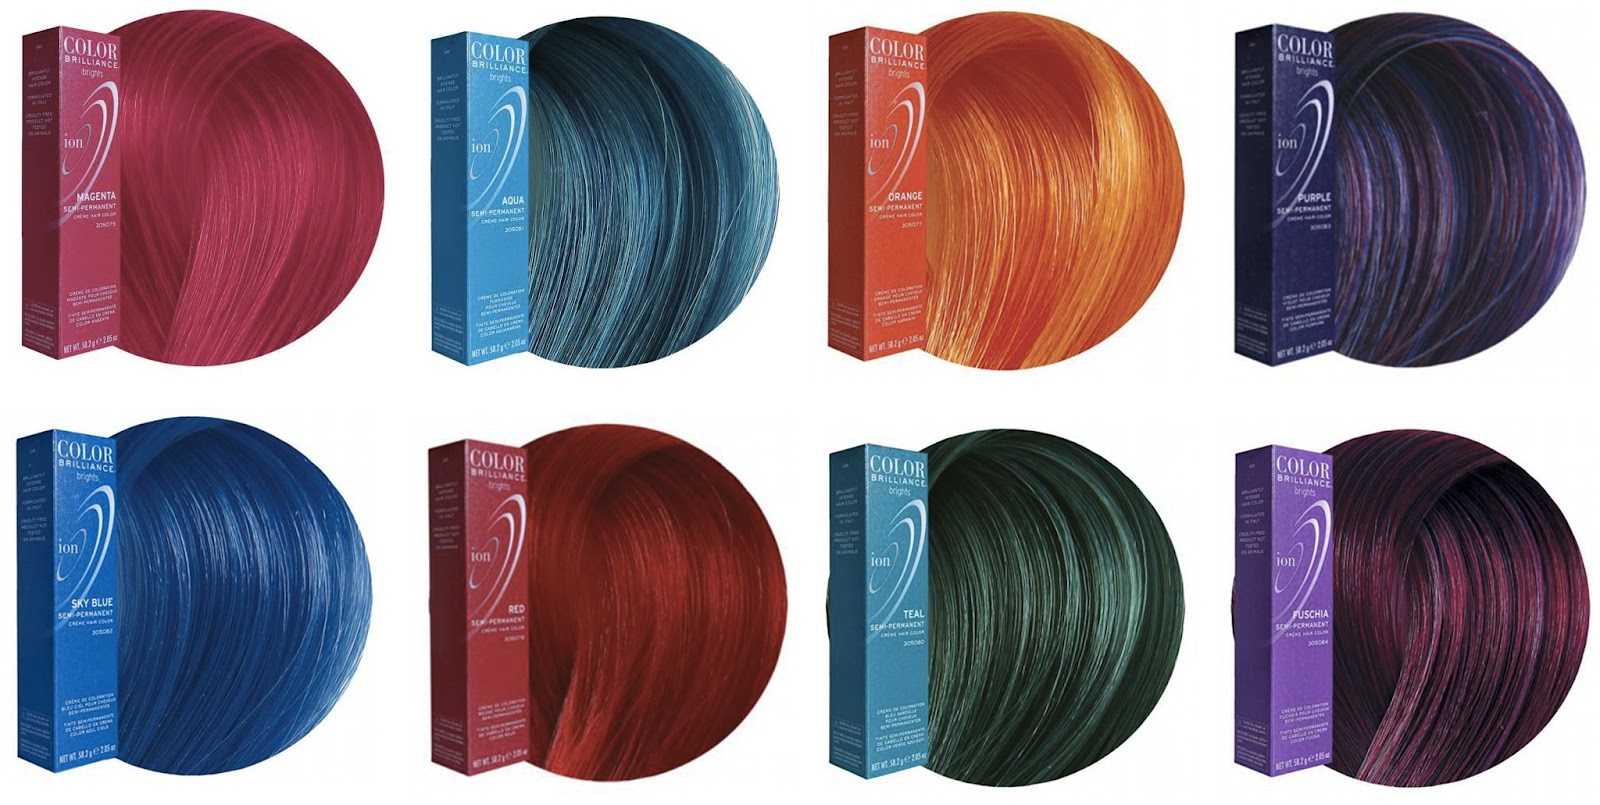 7. Ion Color Brilliance Brights Semi-Permanent Hair Color in Sapphire - wide 6